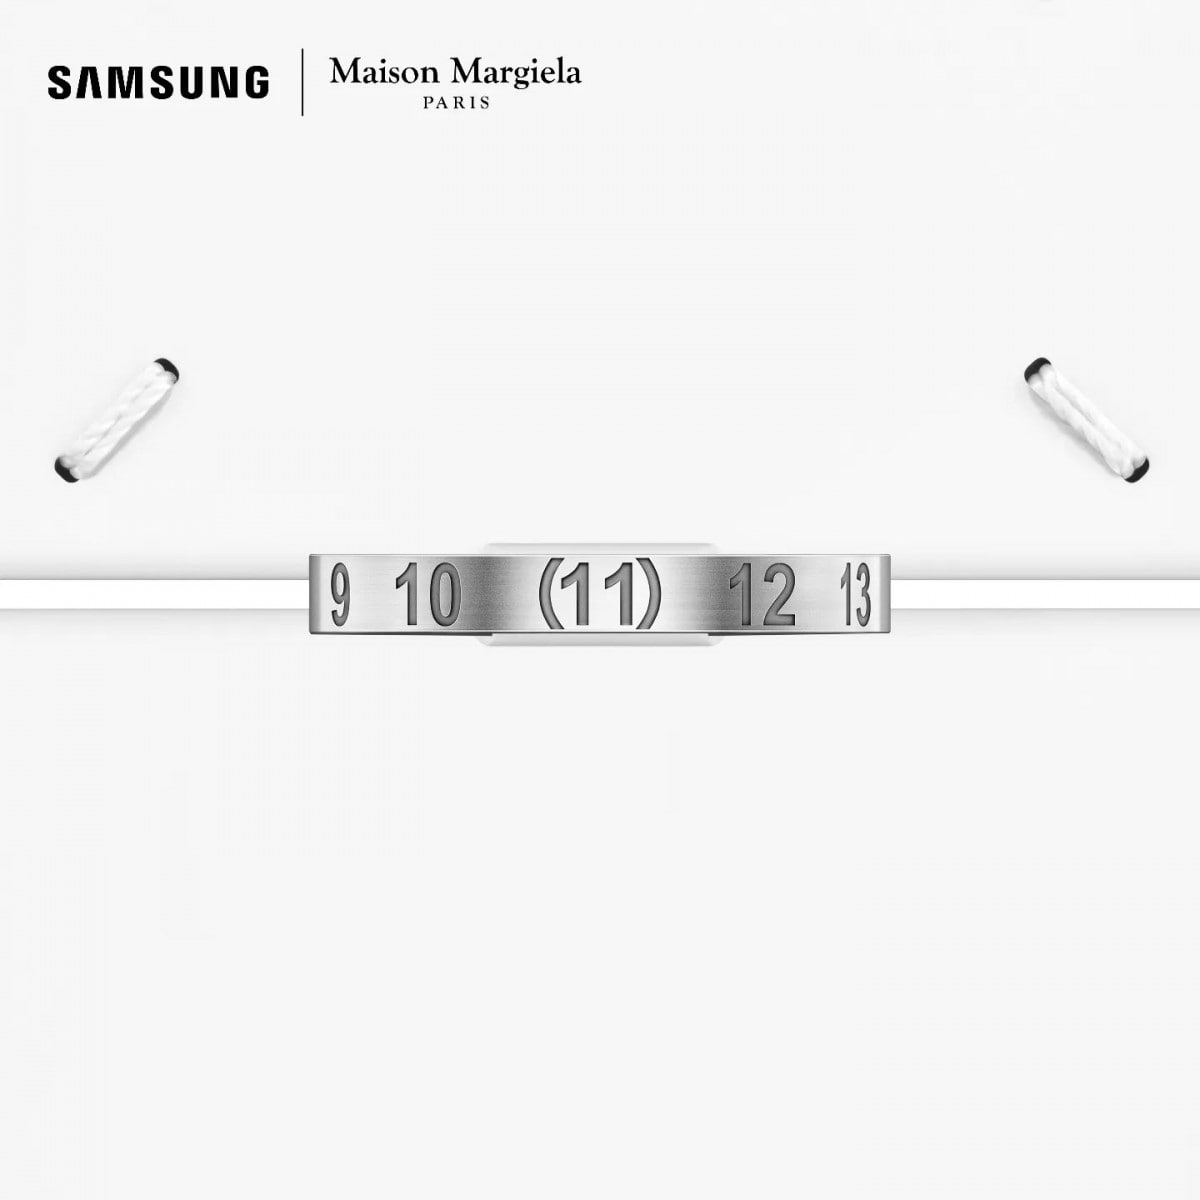 Samsung Galaxy Z Flip 4 Maison Margiela Paris